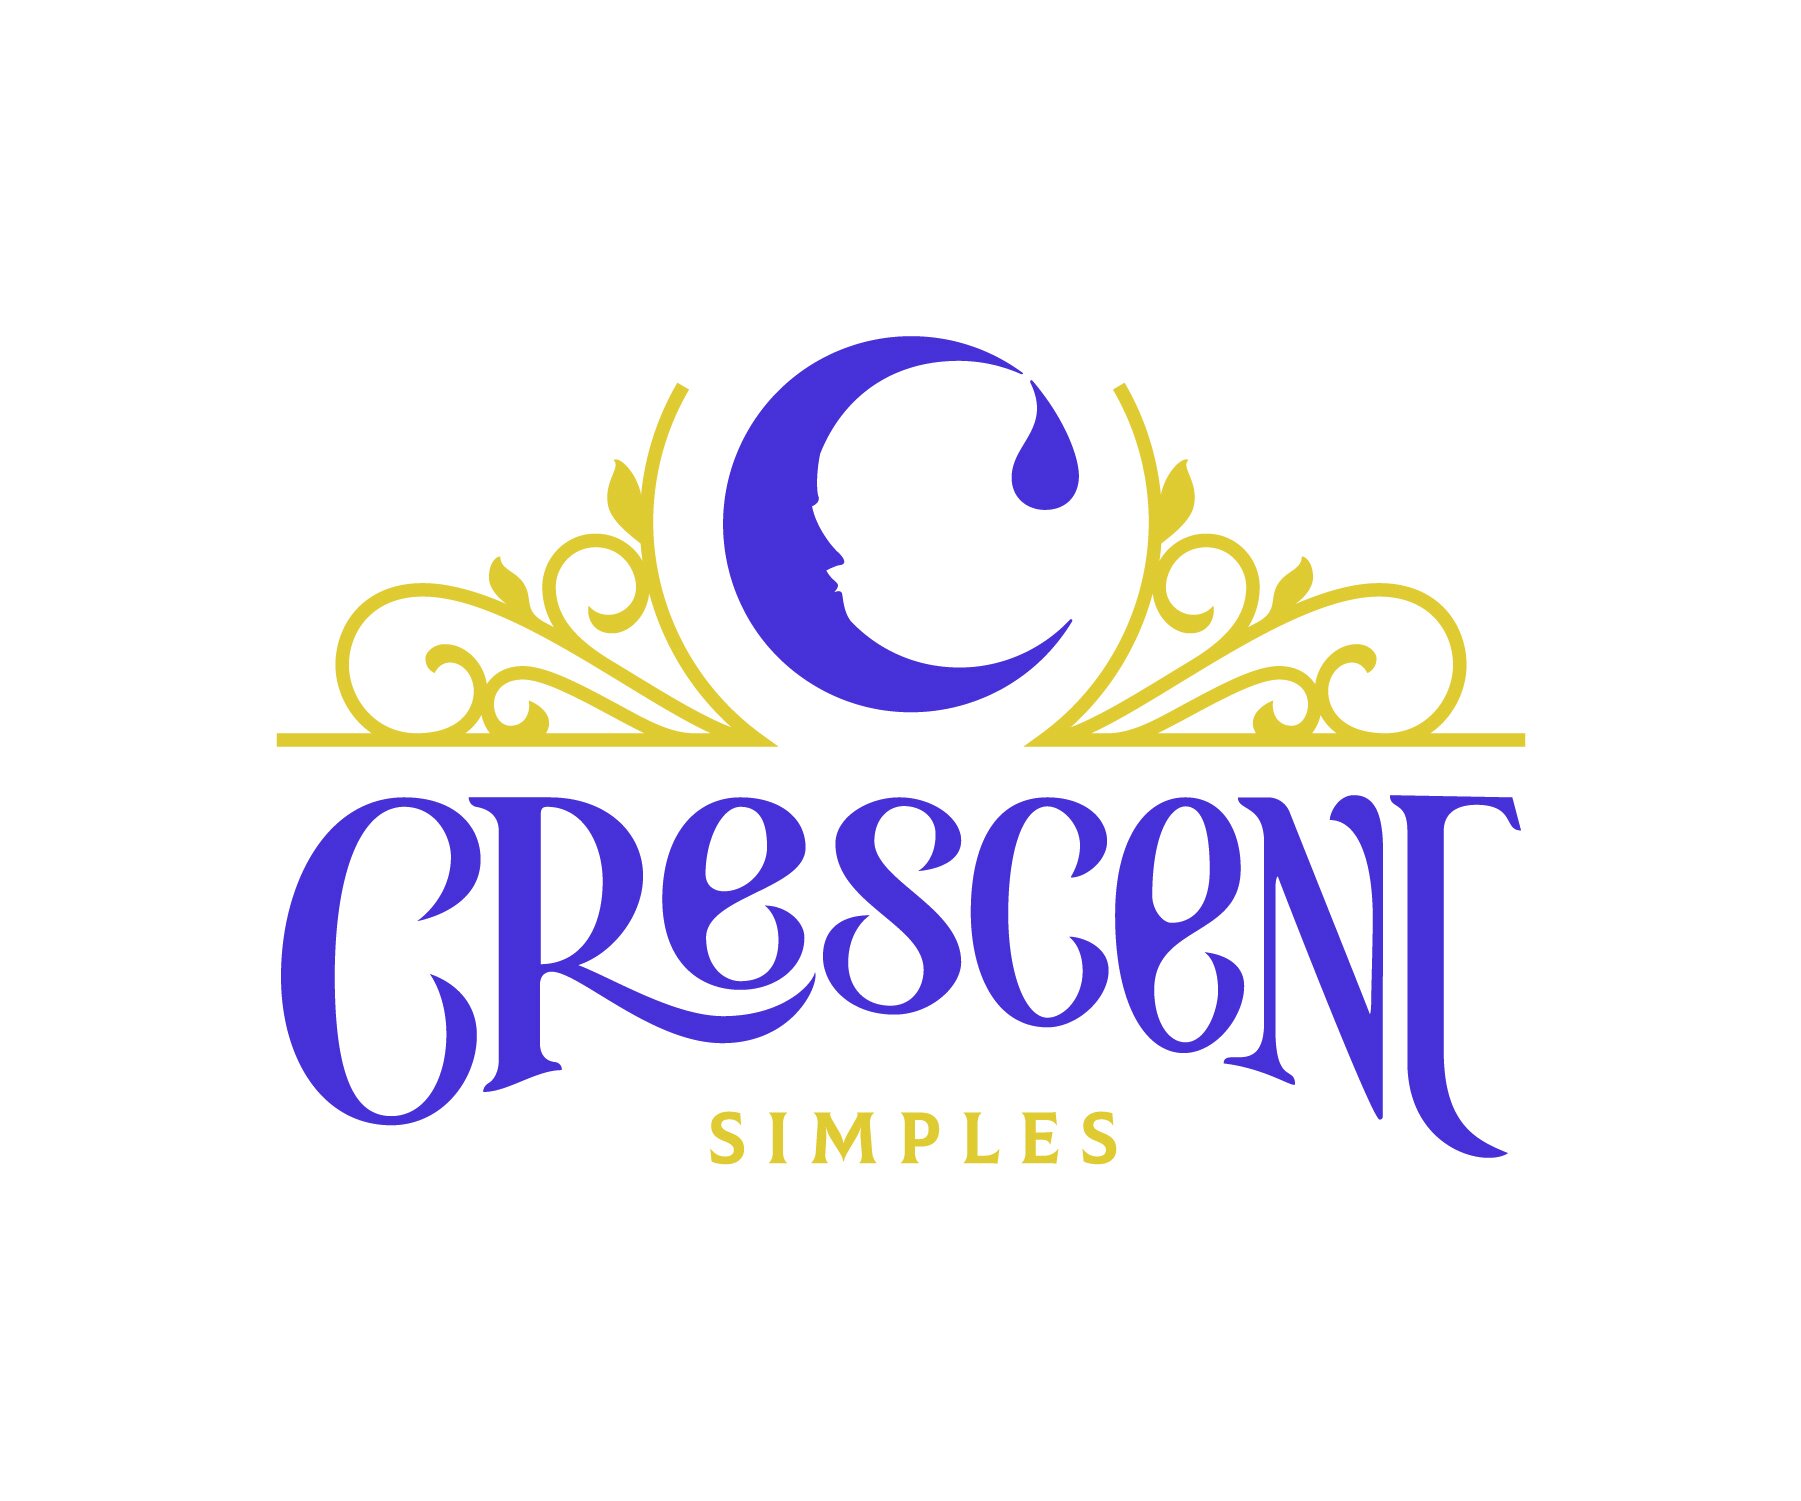 CrescentSimples_CMYK_GoldPlum_Print.jpg